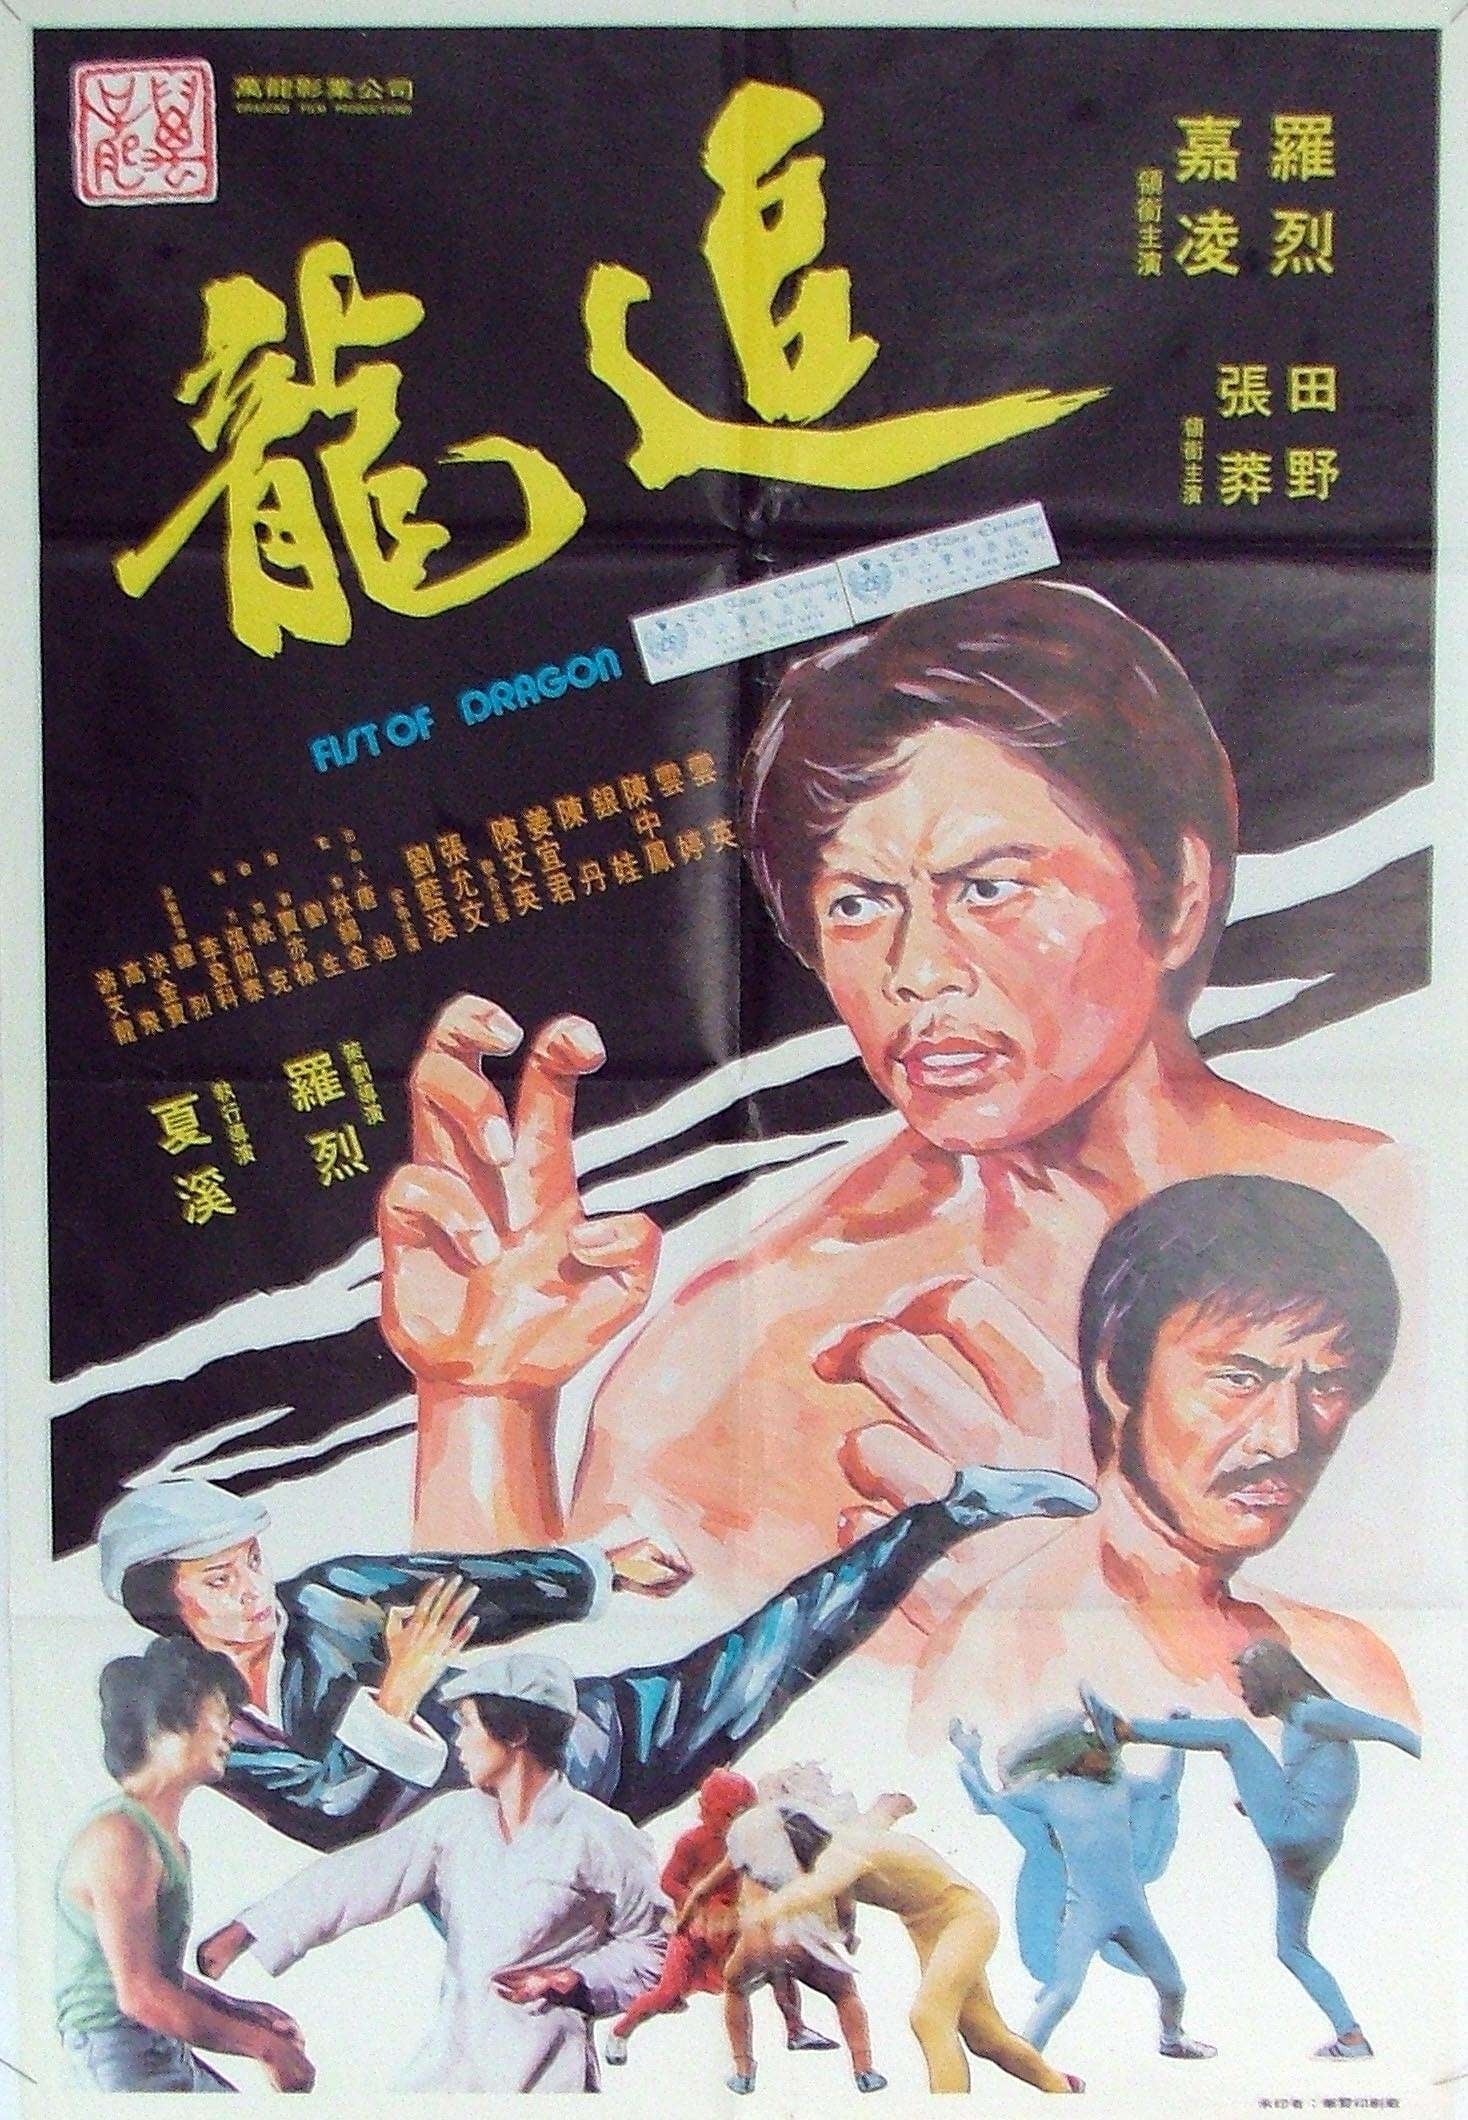 Fist of Dragon (1977)